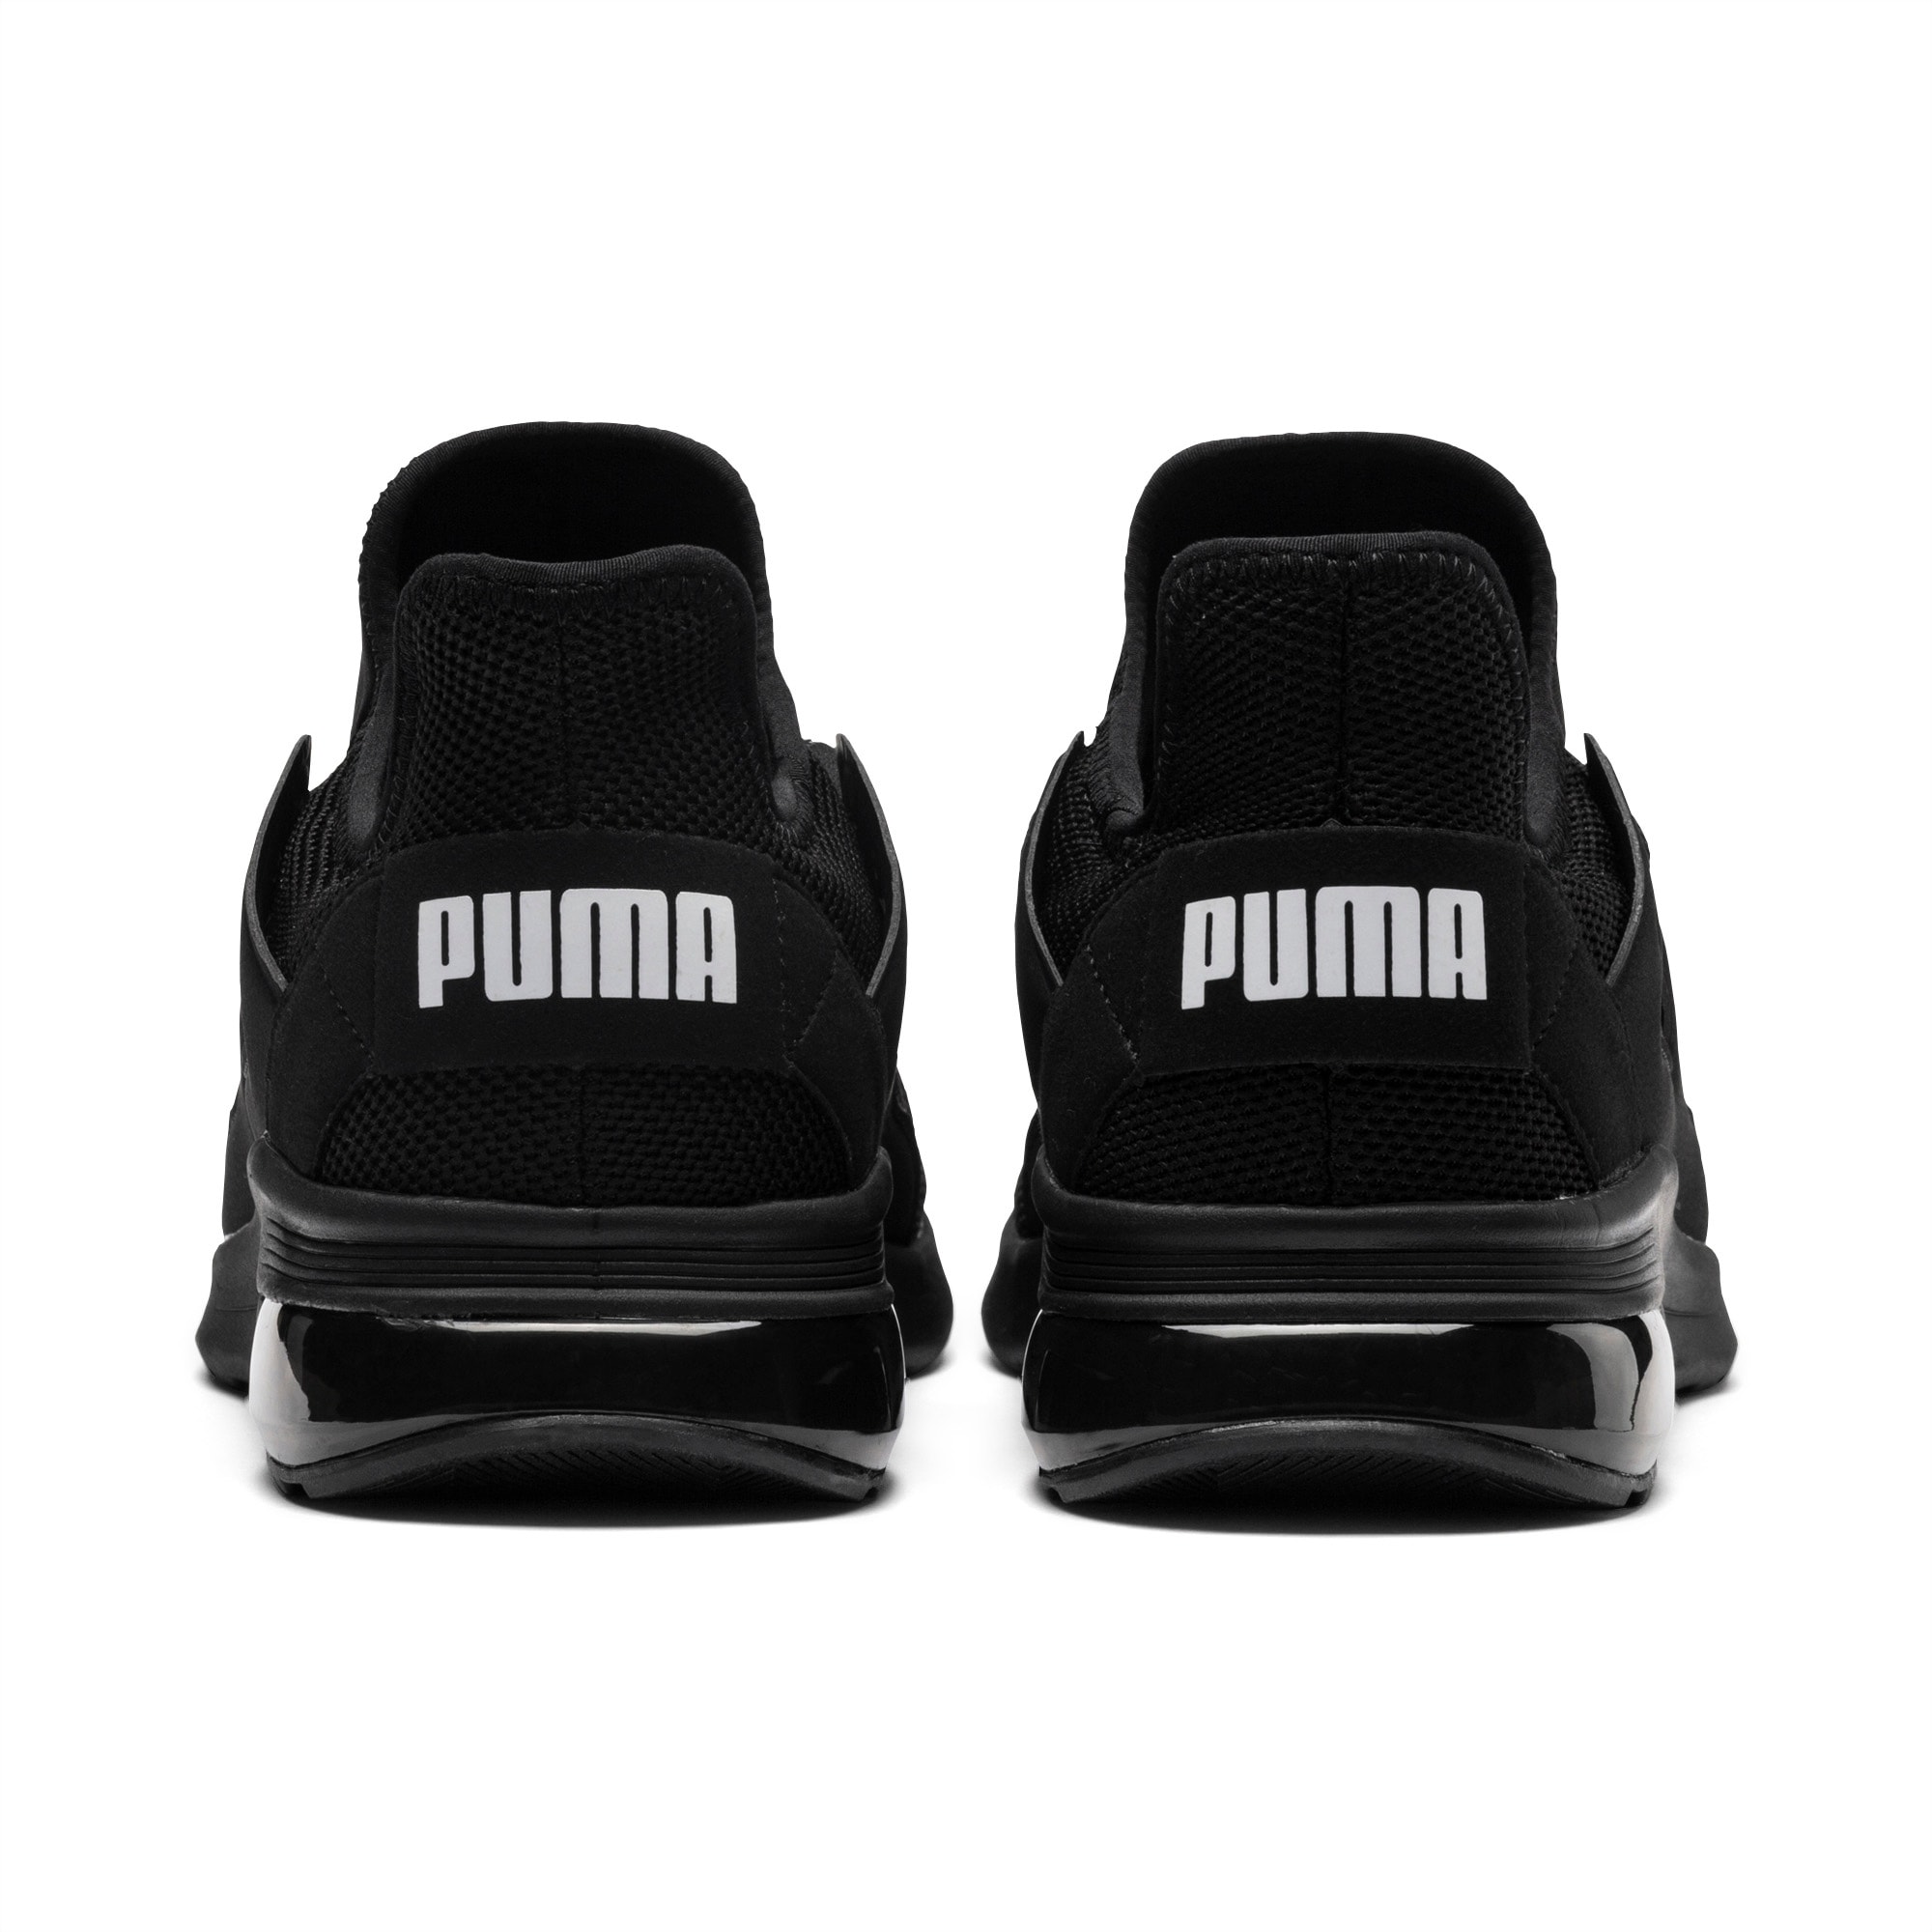 6pm puma women's shoes